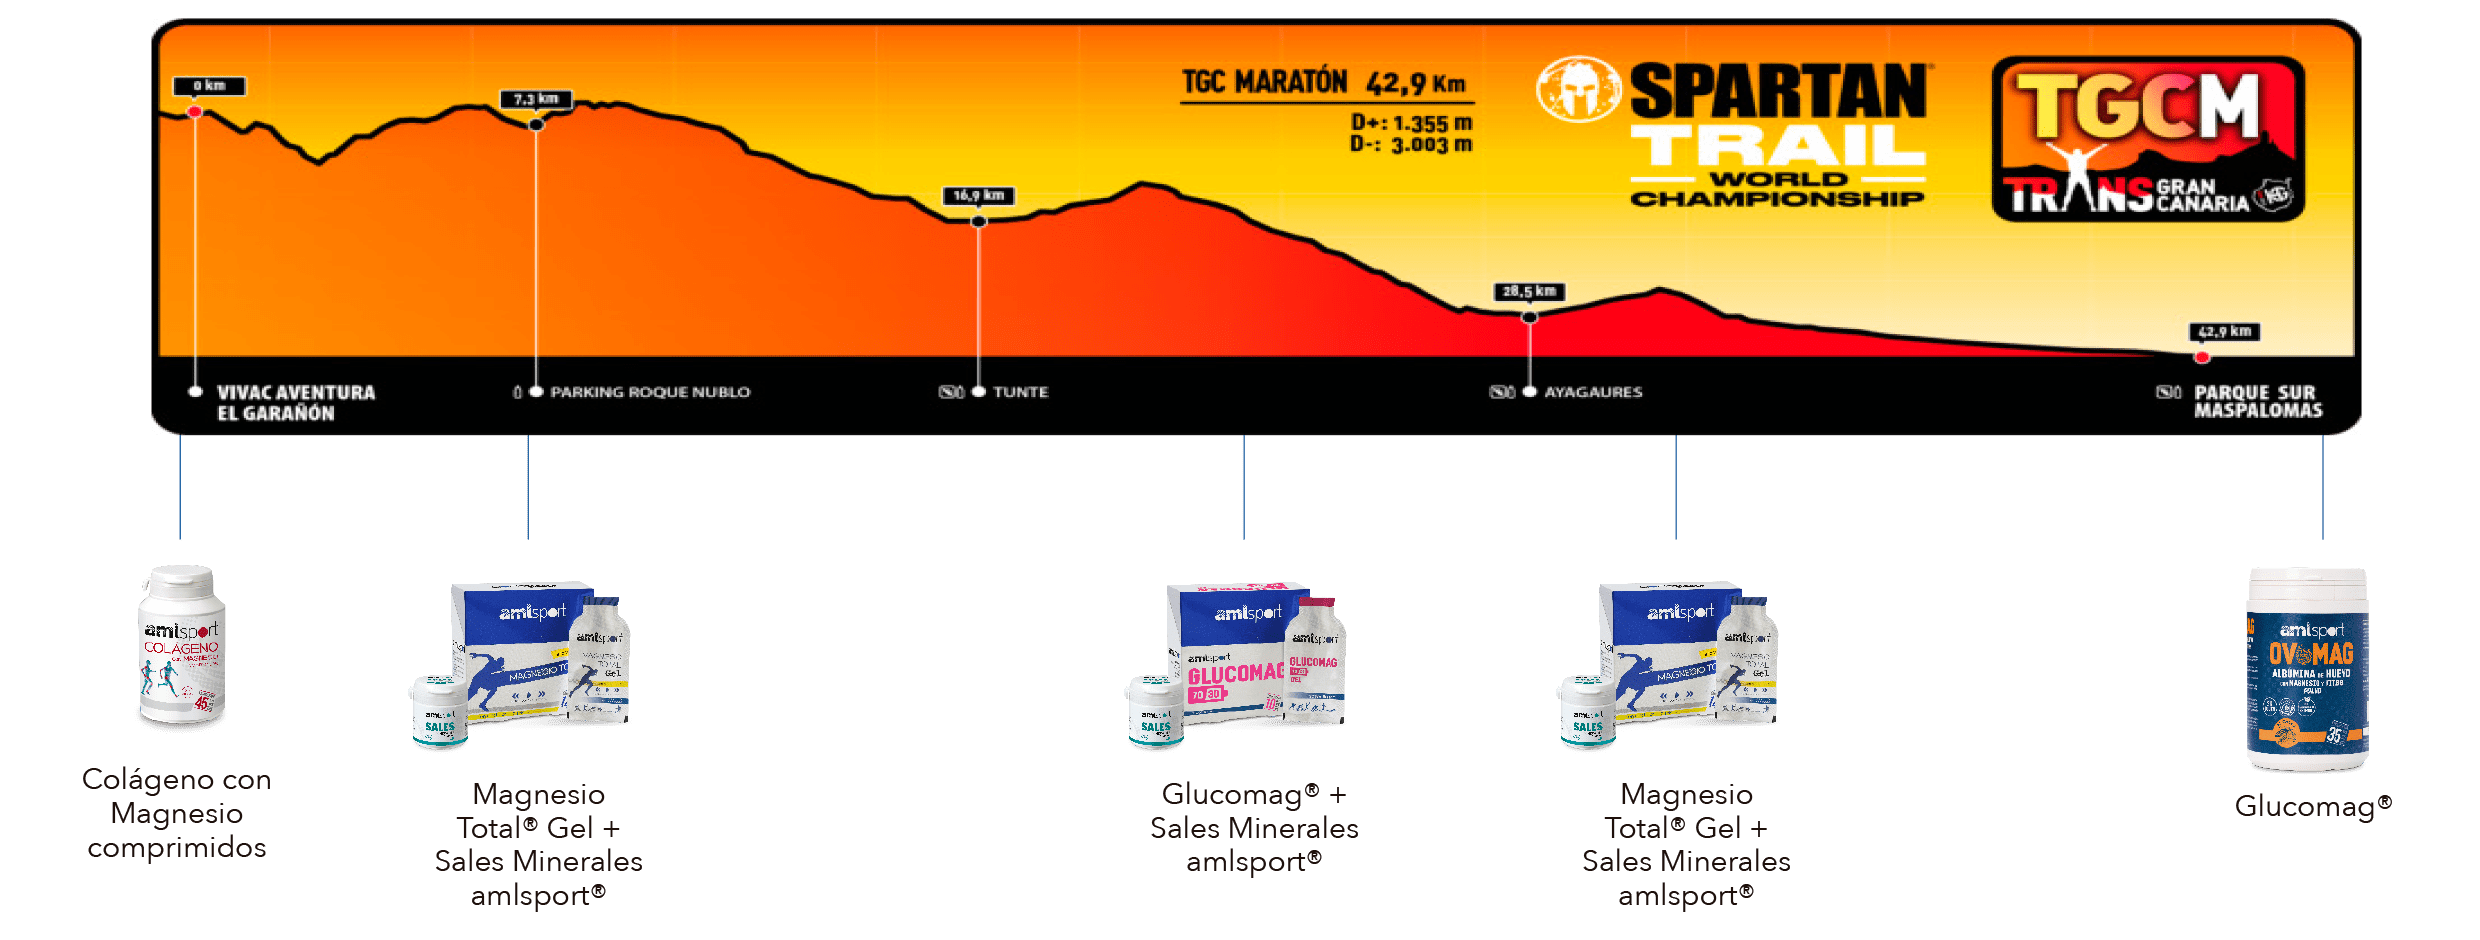 Perfil Transgrancanaria Maratón 2022